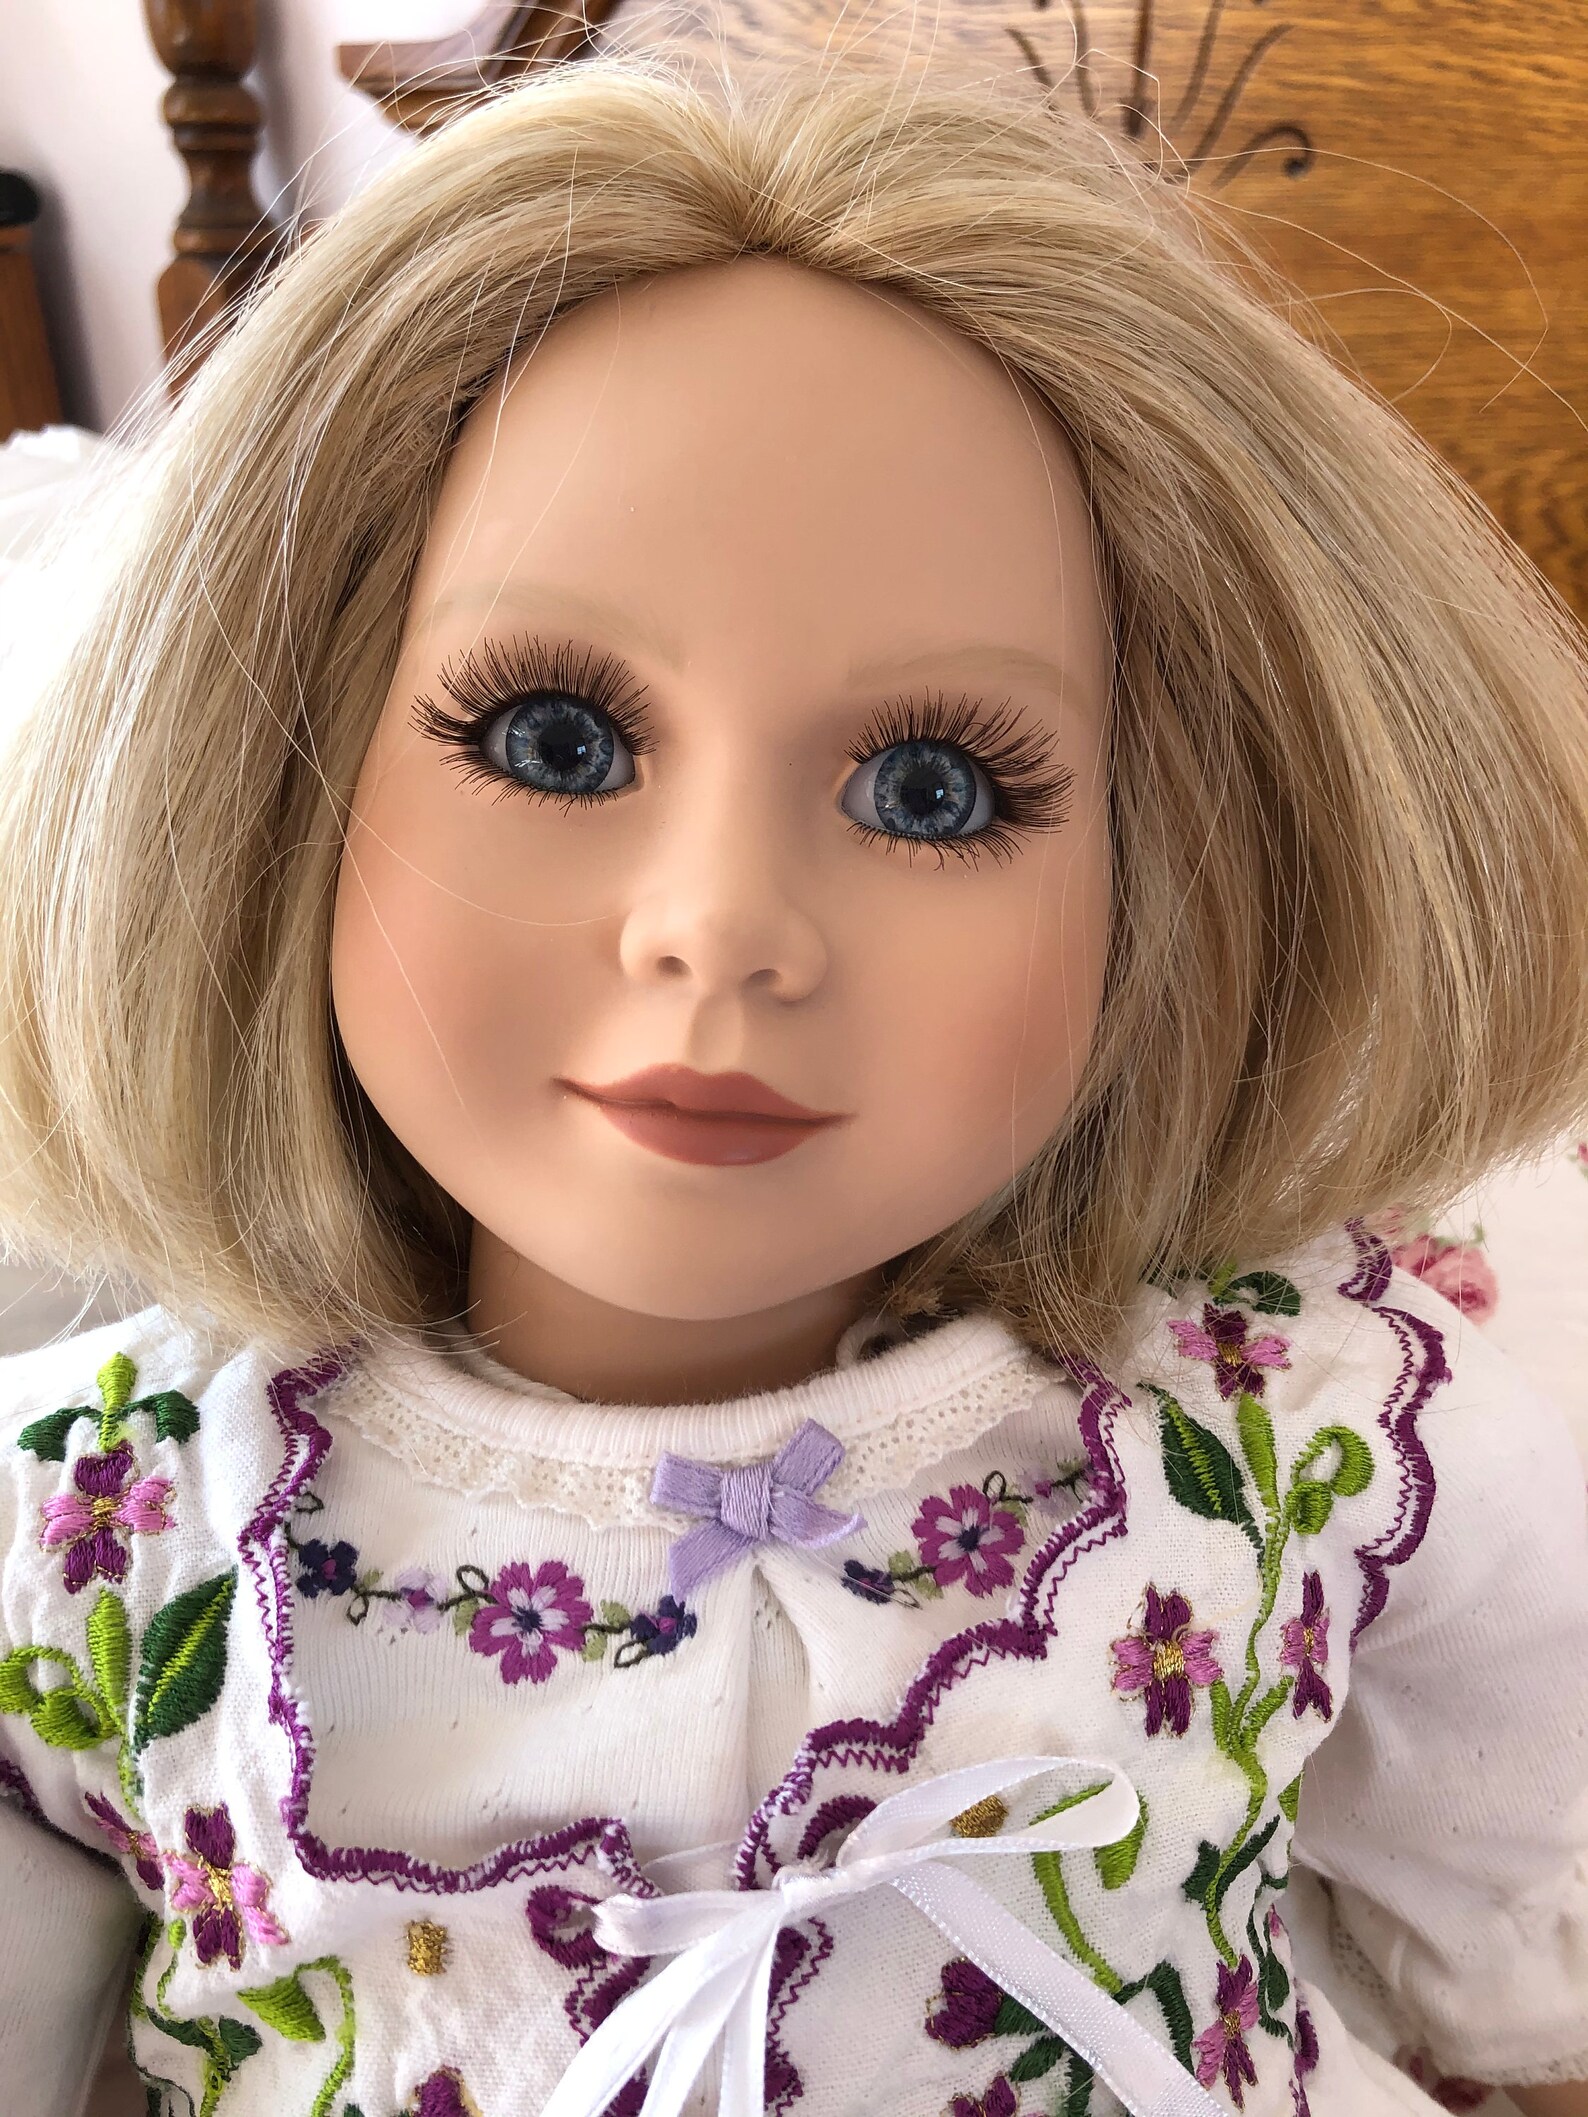 23 My Twinn doll with short blonde hair and blue eyes | Etsy